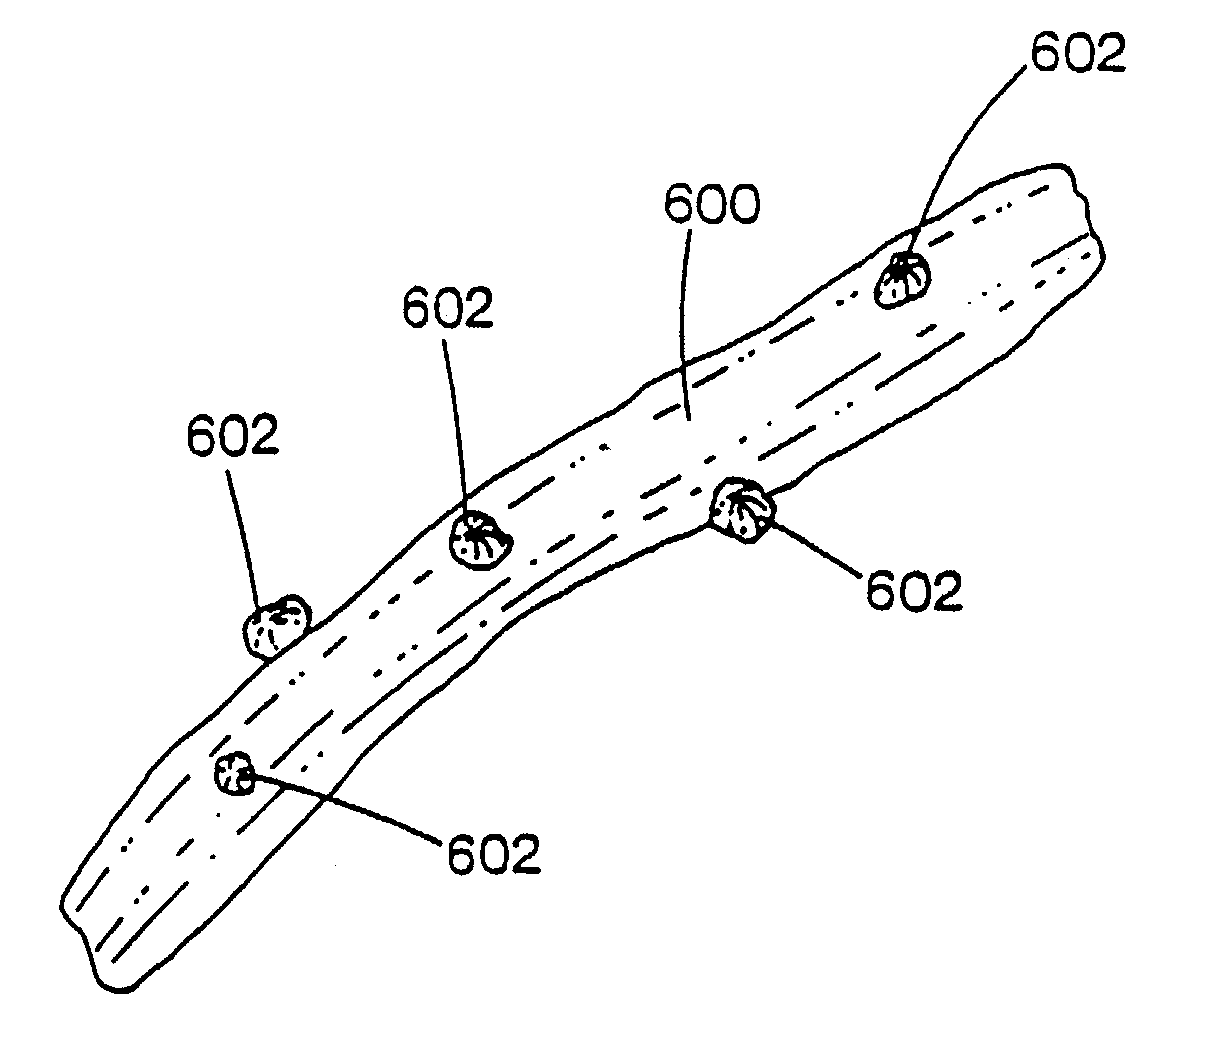 Method of binding binder treated particles to fibers